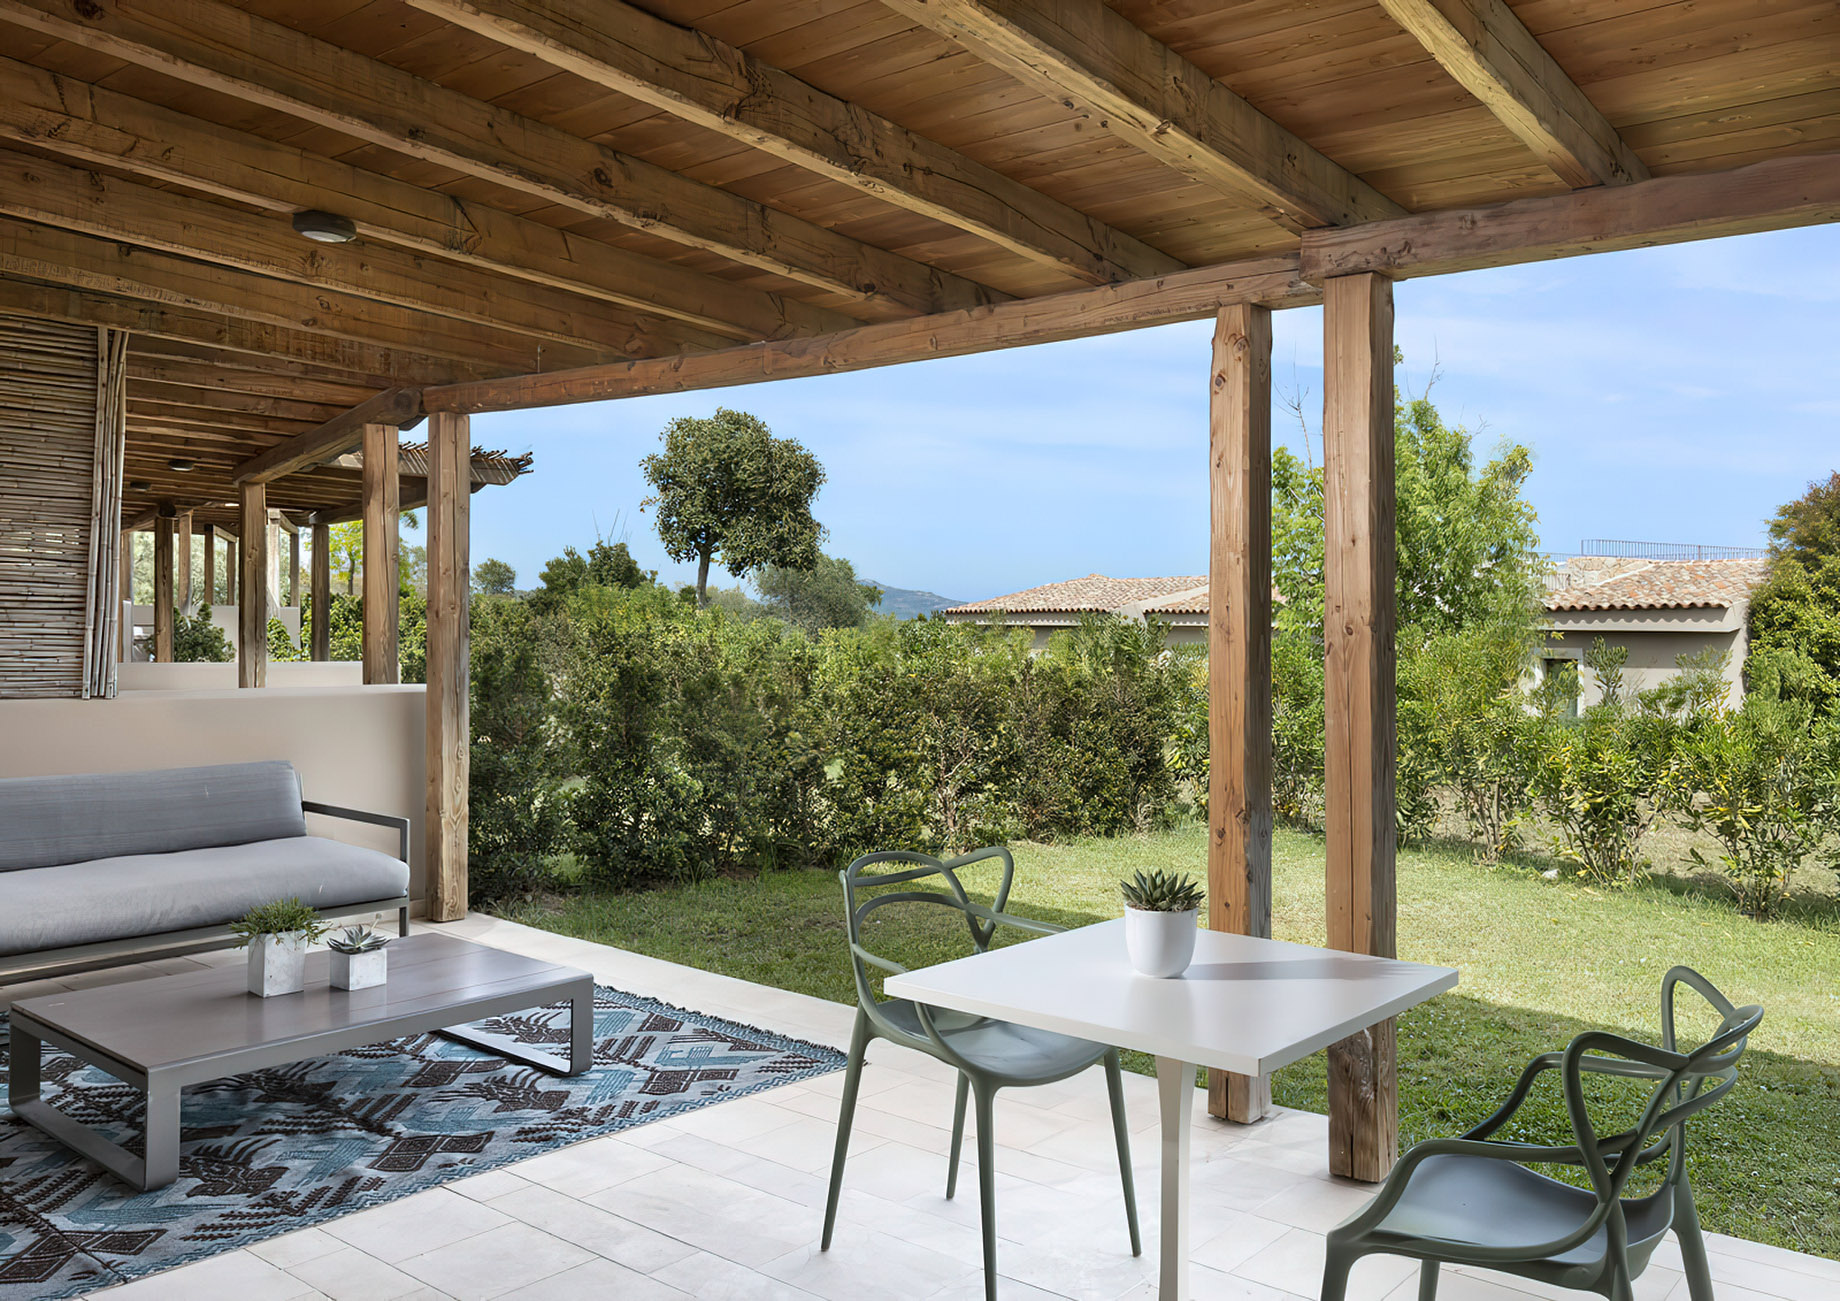 Baglioni Resort Sardinia – San Teodoro, Sardegna, Italy – Rooftop Terrace Suite Deck